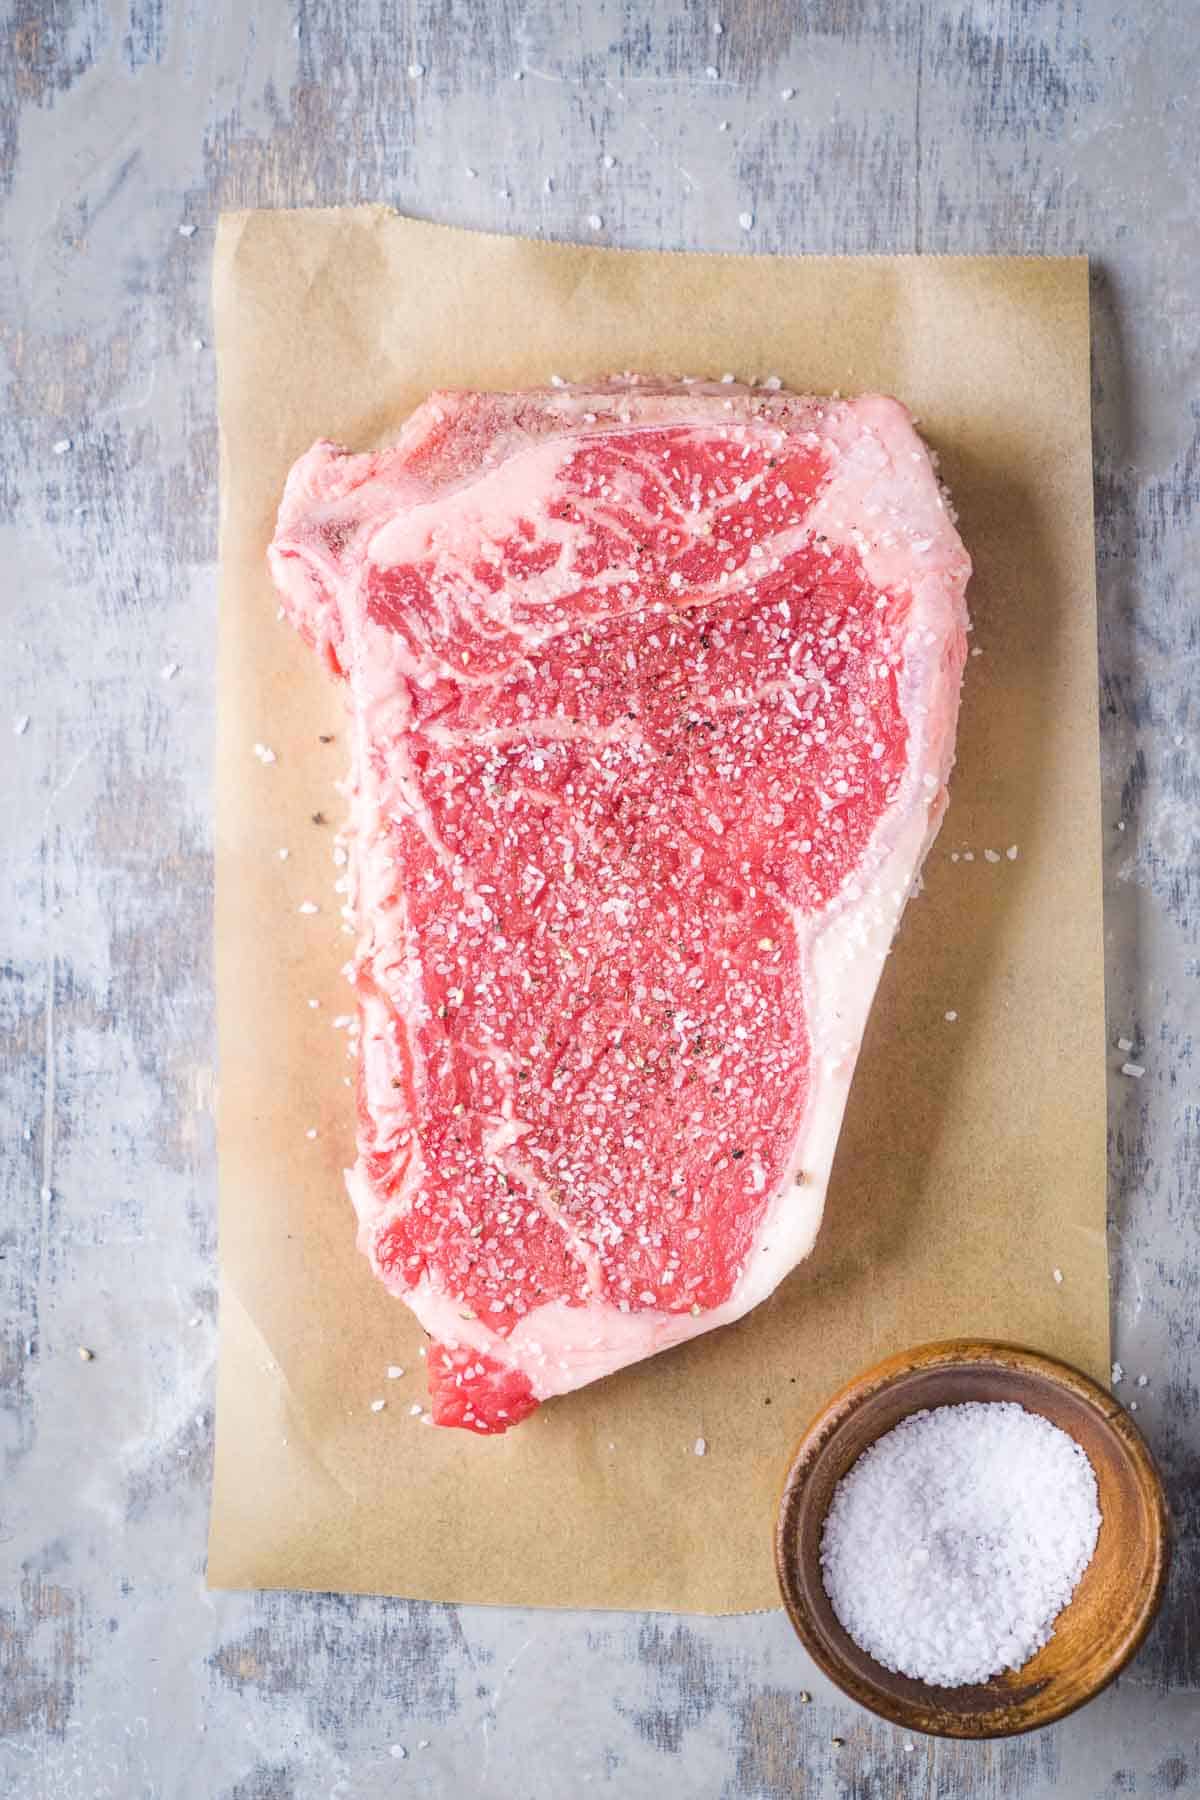 uncooked strip steak on butcher paper next to pinch bowl of salt